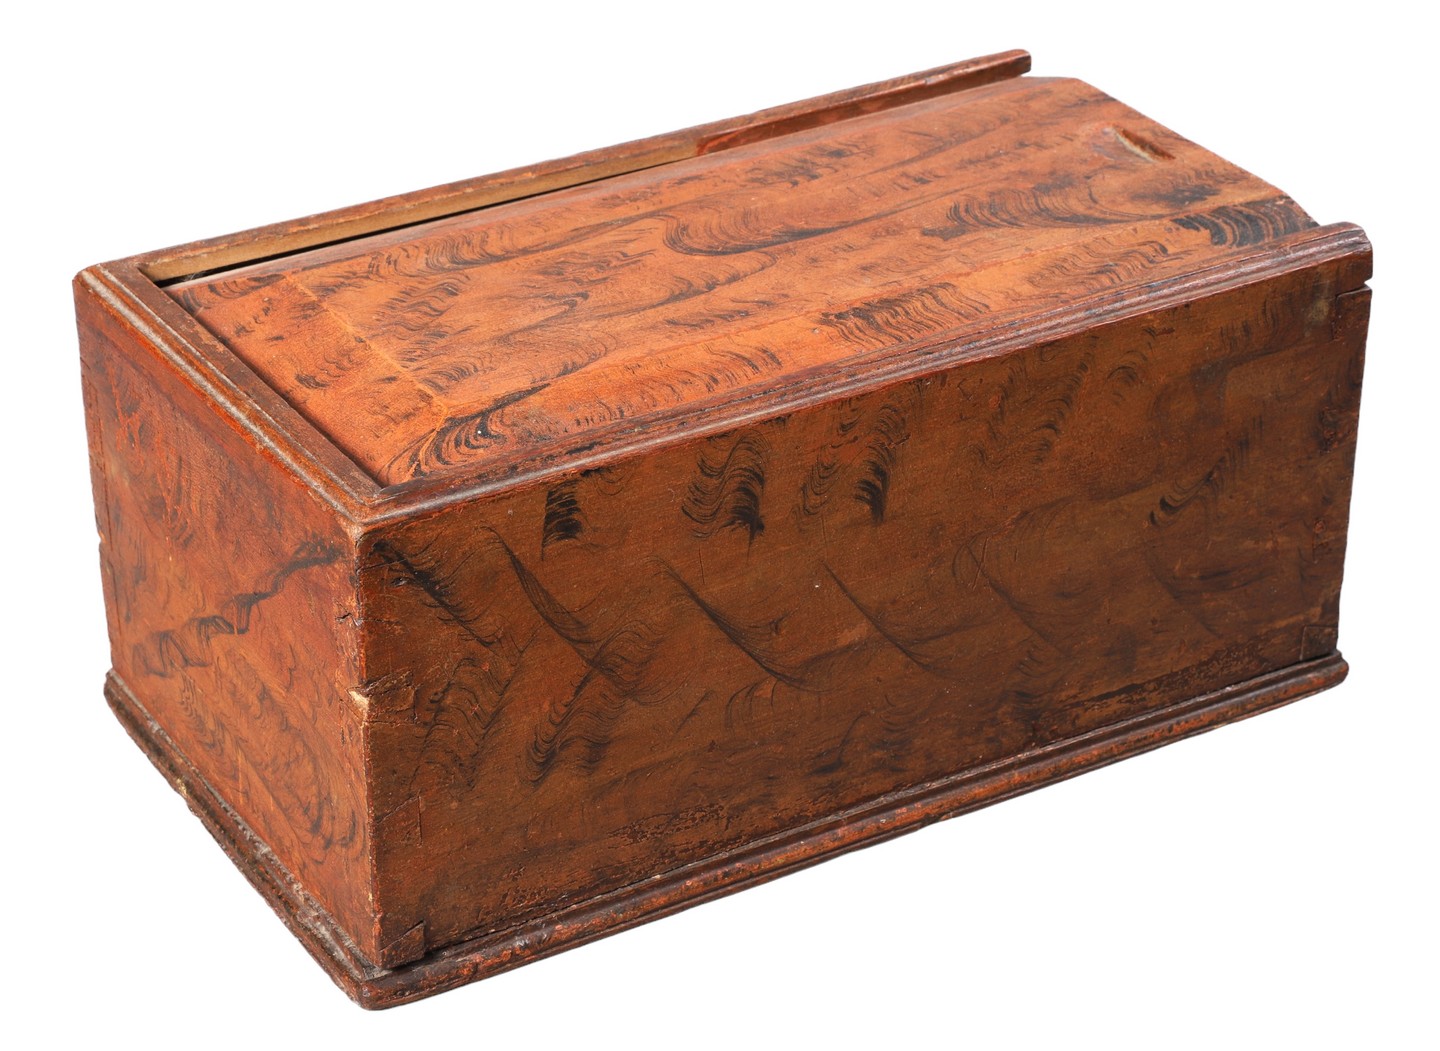 Wooden faux grain box, dovetailed corners,